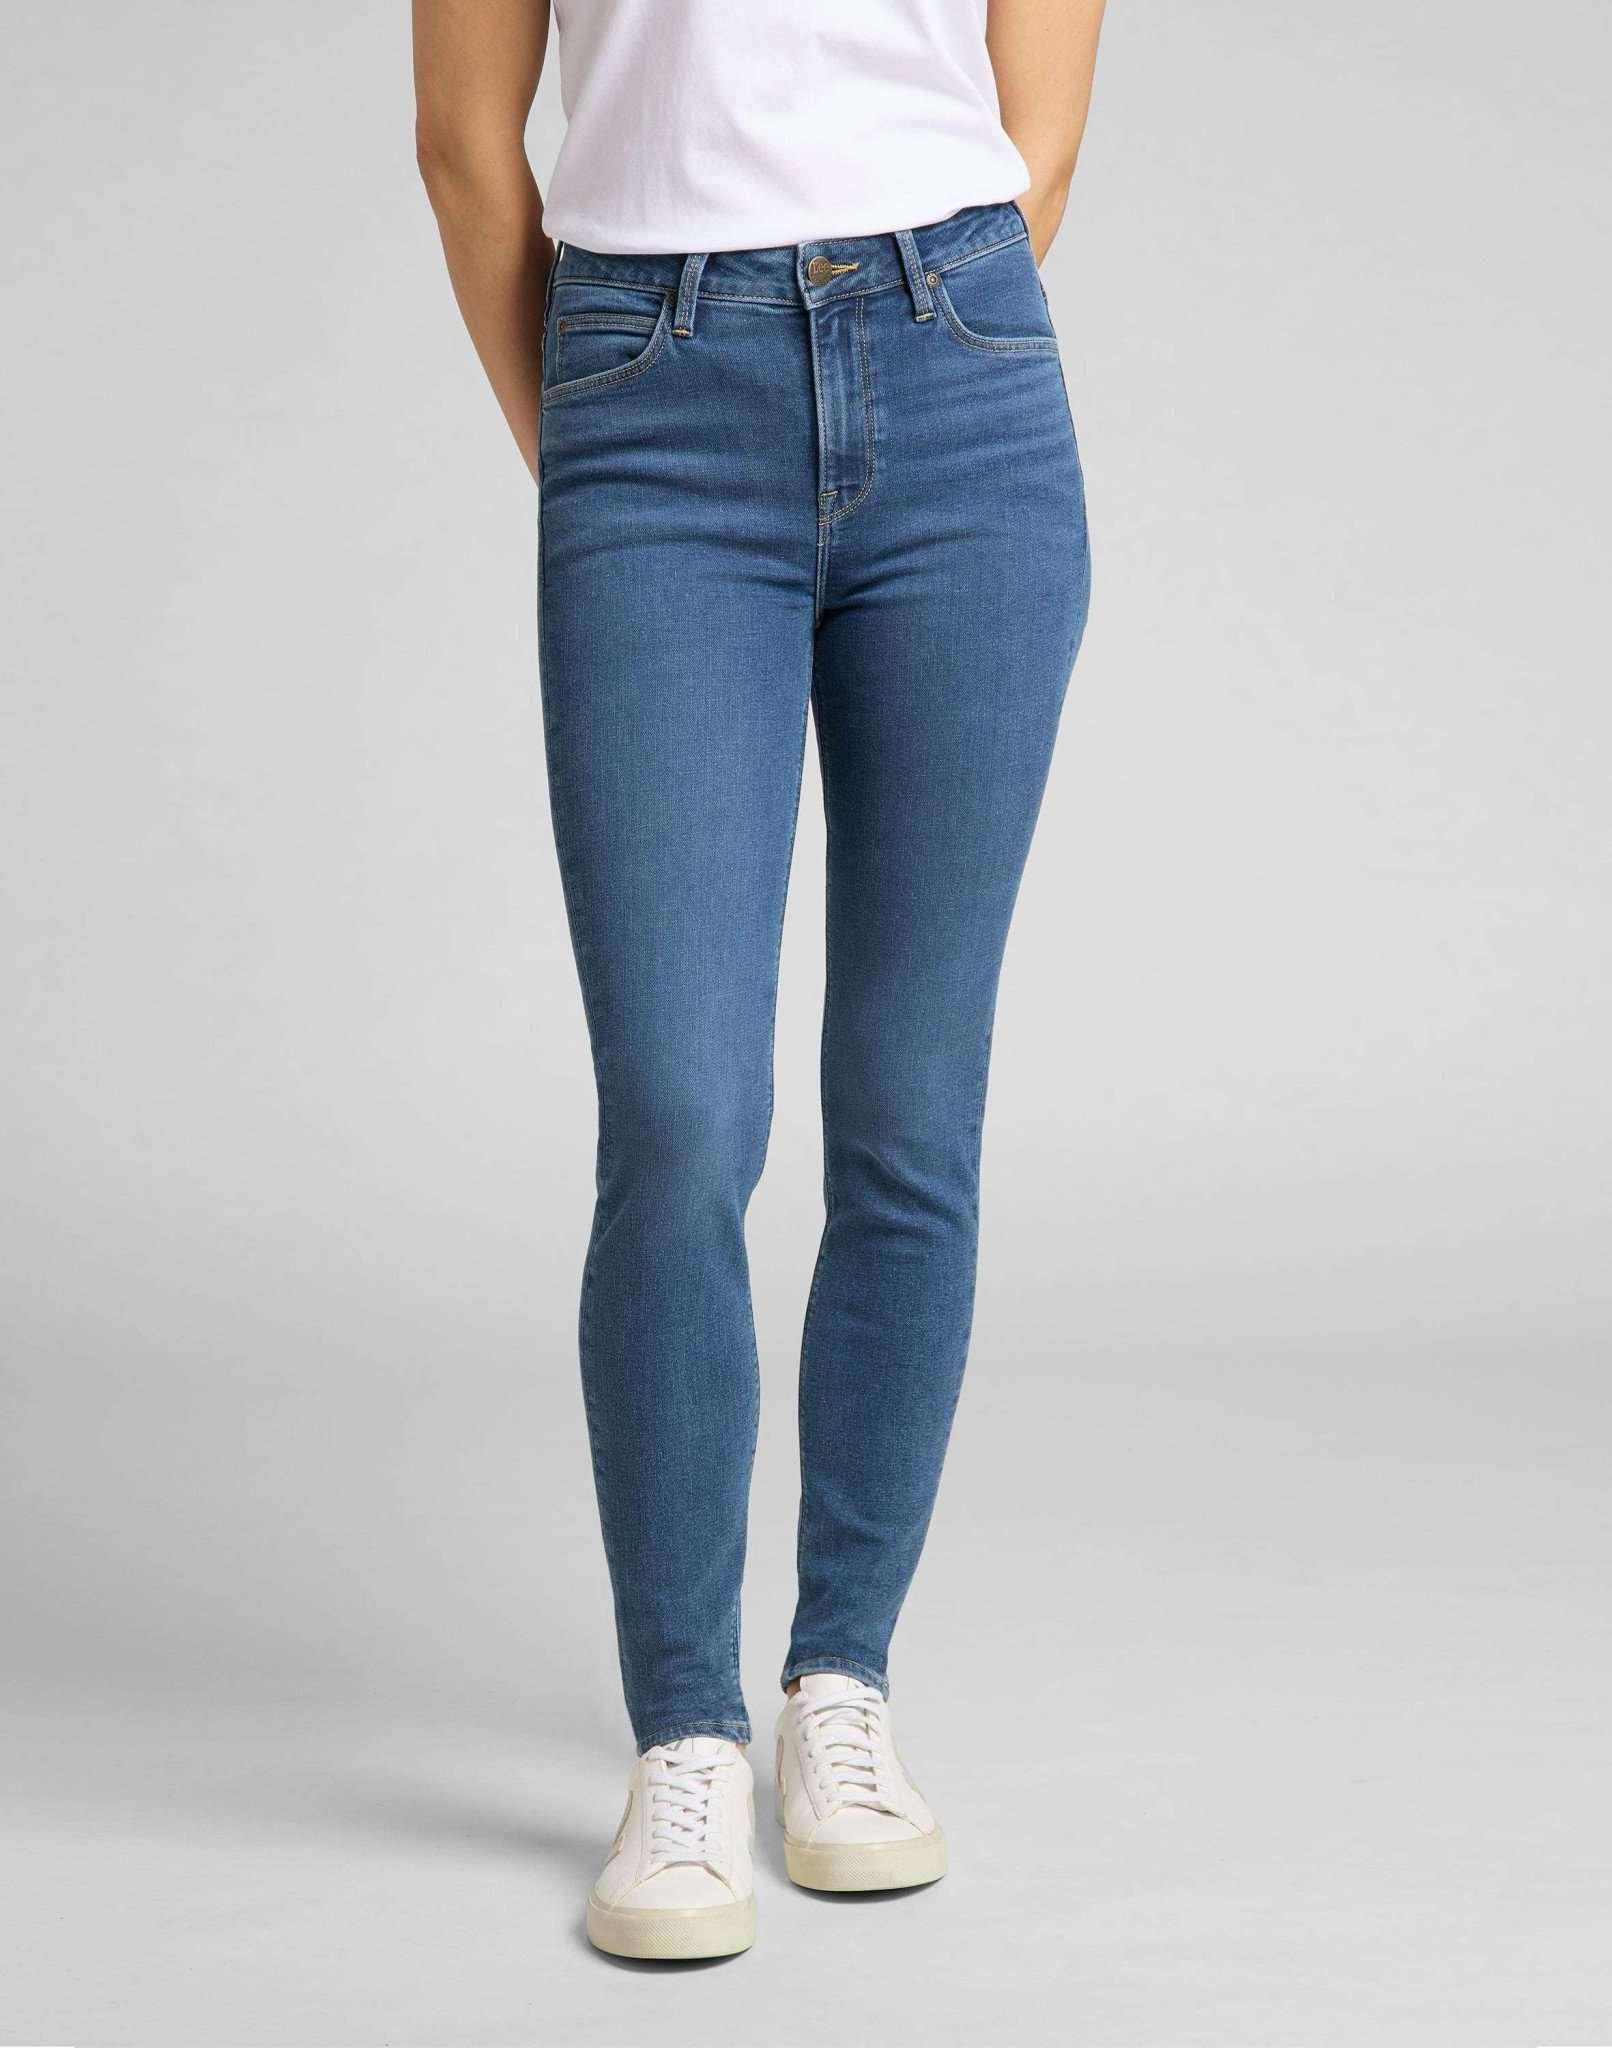 Jeans Skinny Fit Scarlett High Damen Blau Denim L31/W27 von Lee